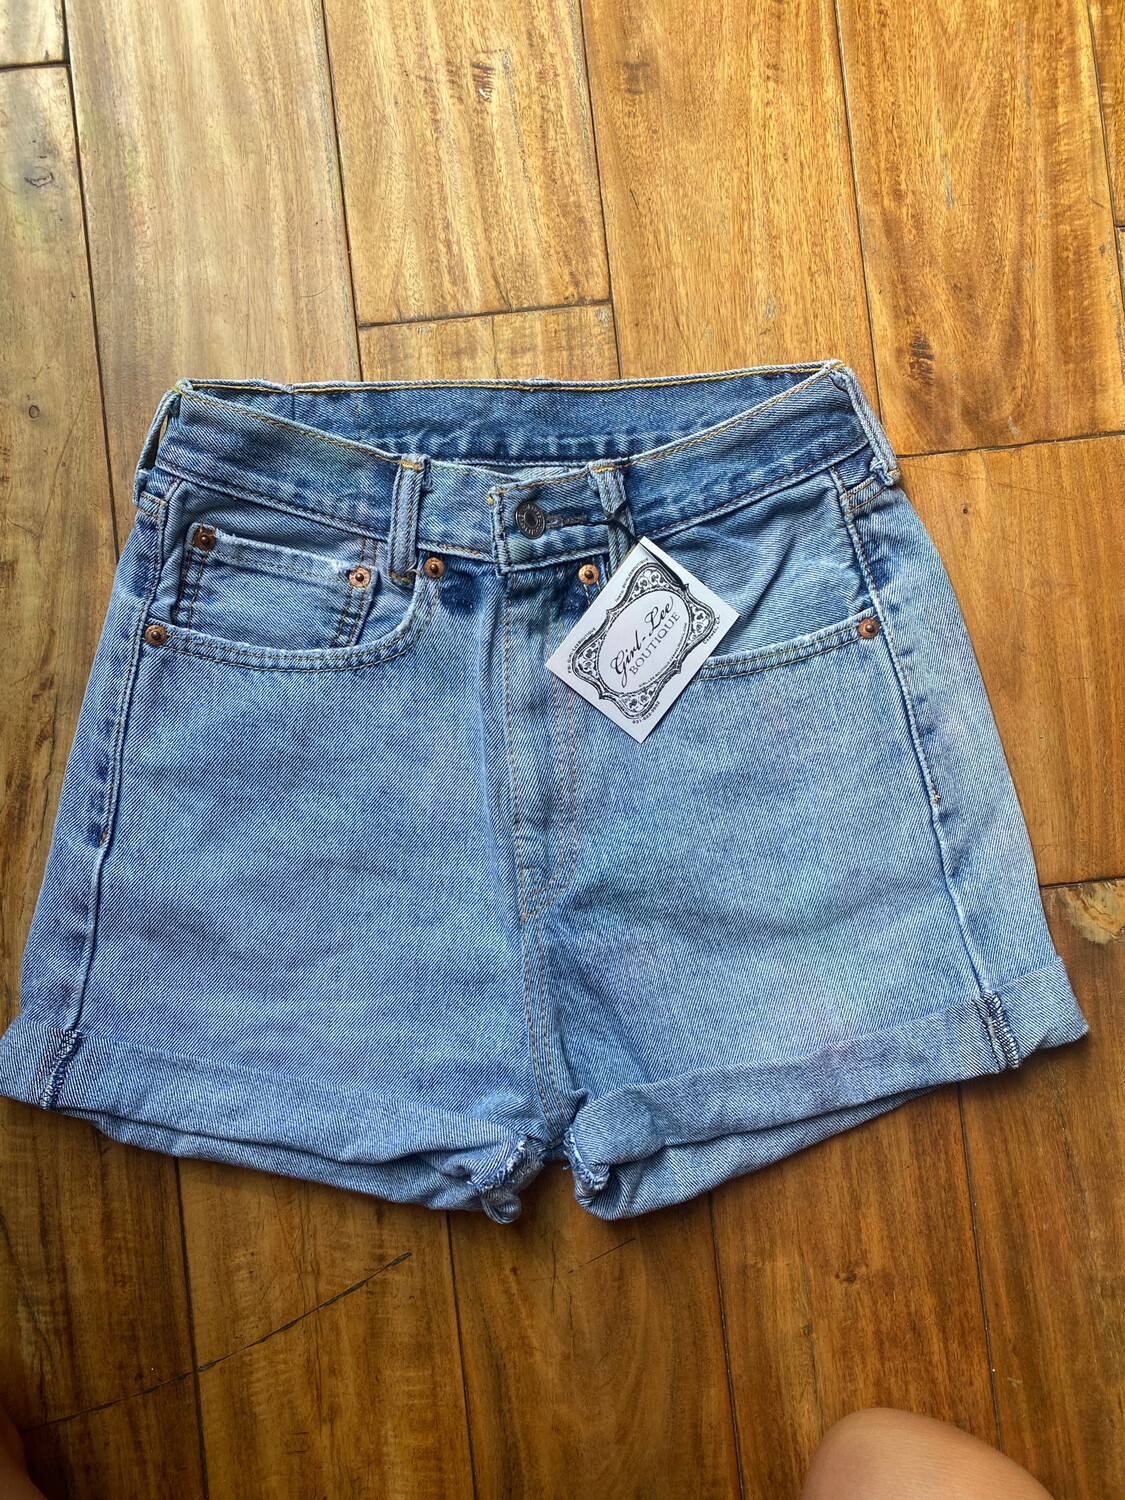 Levi's 505 Re-Done Vintage Rolled Denim Shorts, 26" Waist (2)